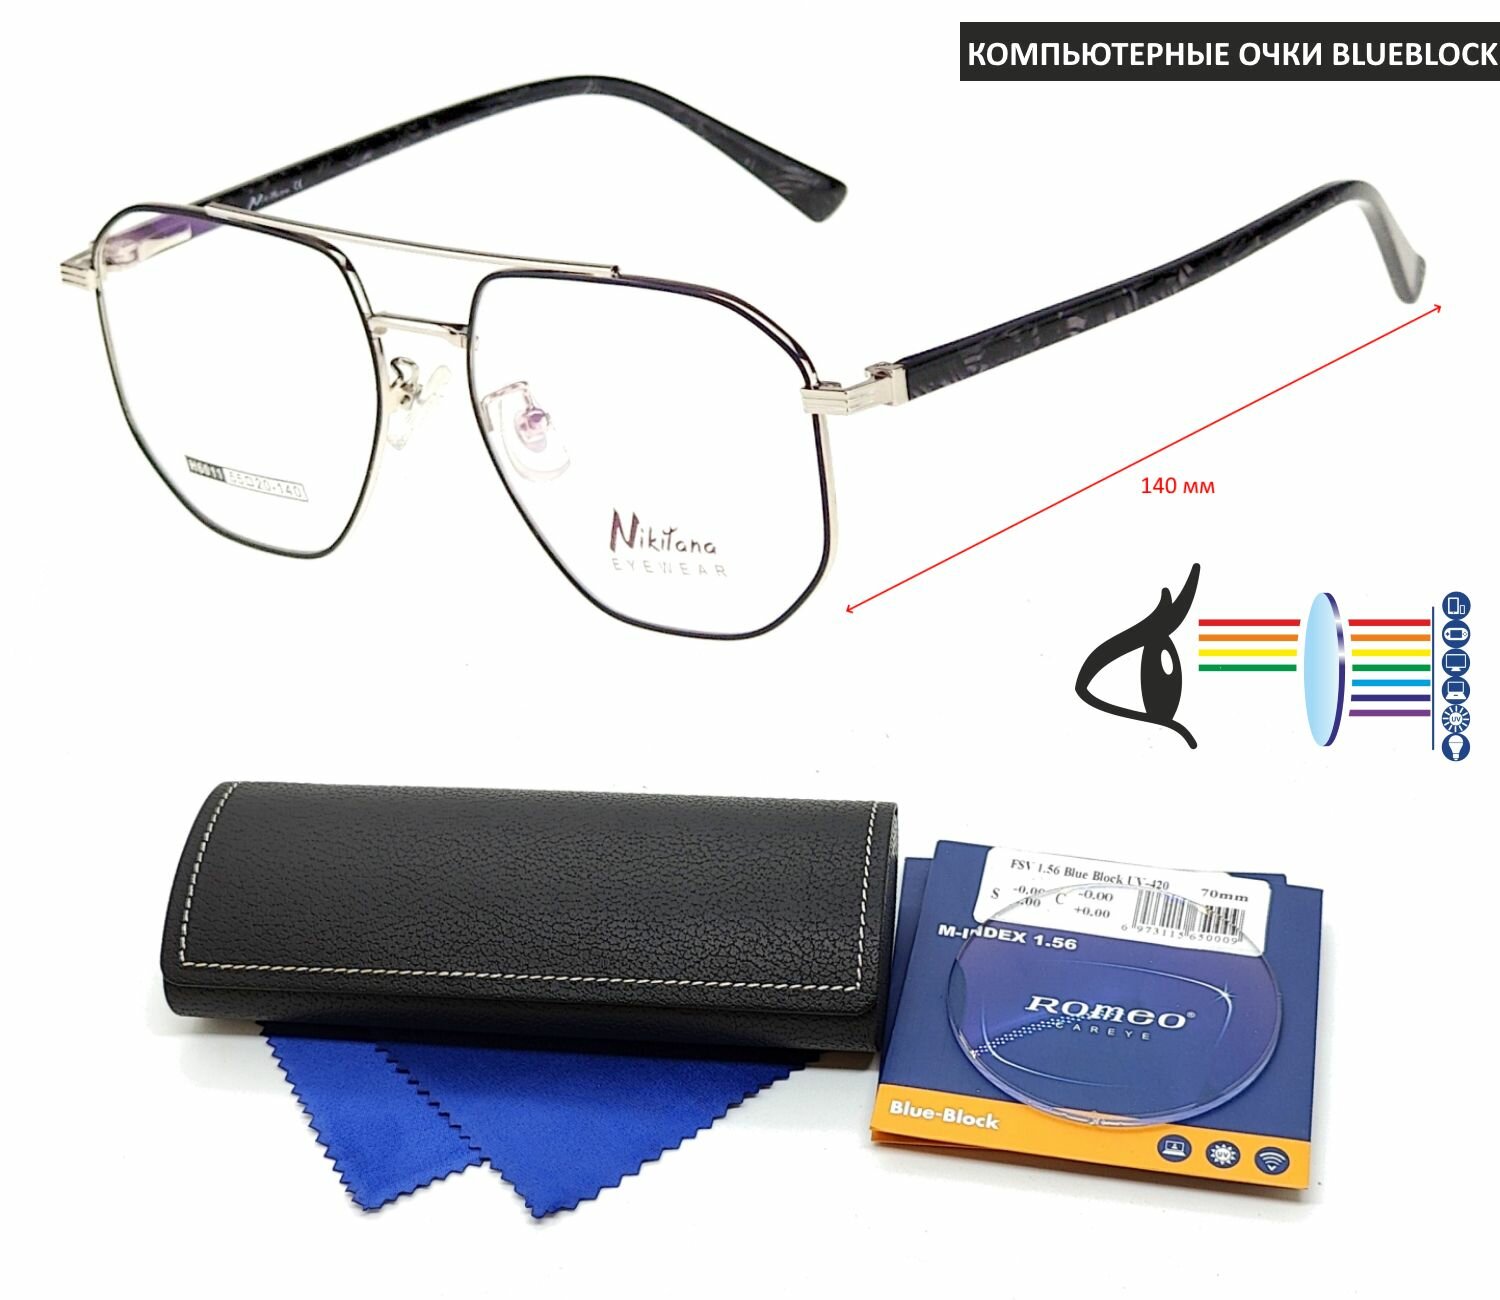 Компьютерные очки с футляром на магните NIKITANA мод. 6011 Цвет 4 с линзами ROMEO 1.56 Blue Block -2.25 РЦ 64-66